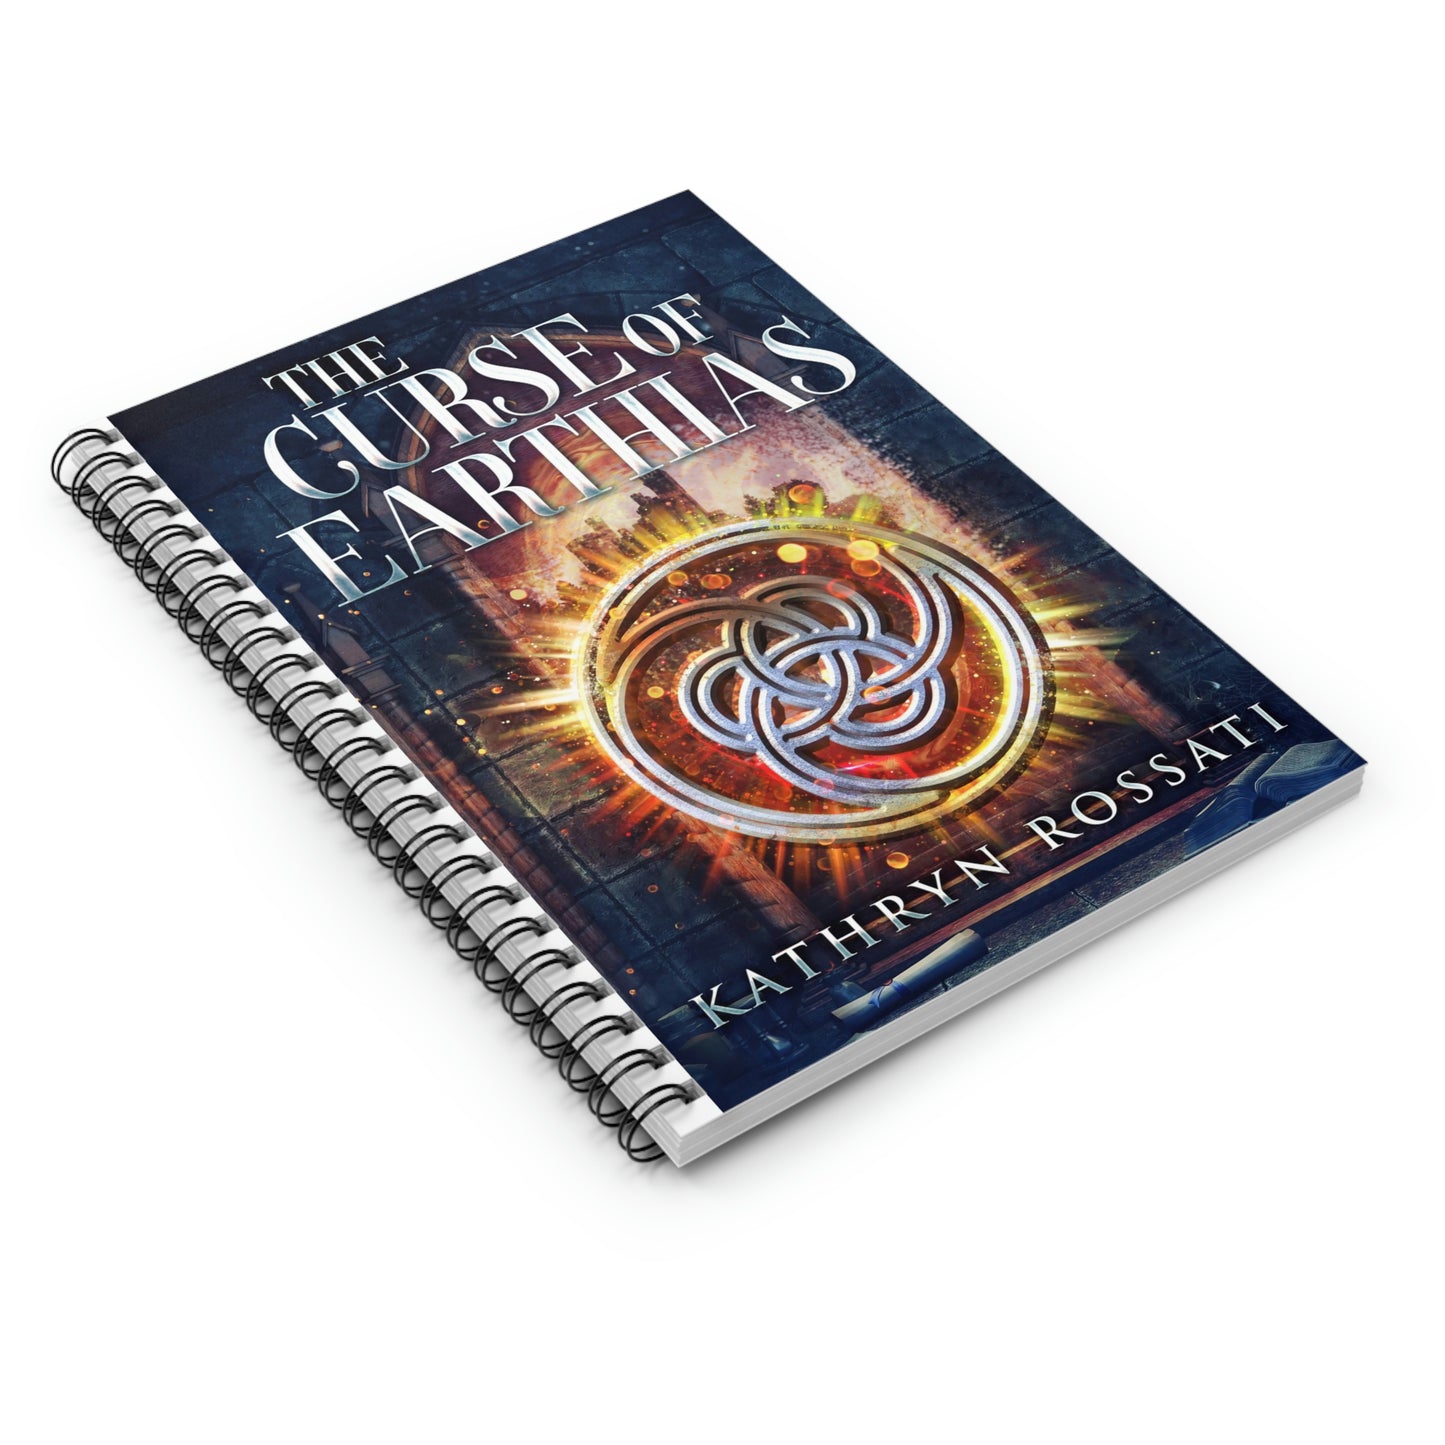 The Curse Of Earthias - Spiral Notebook